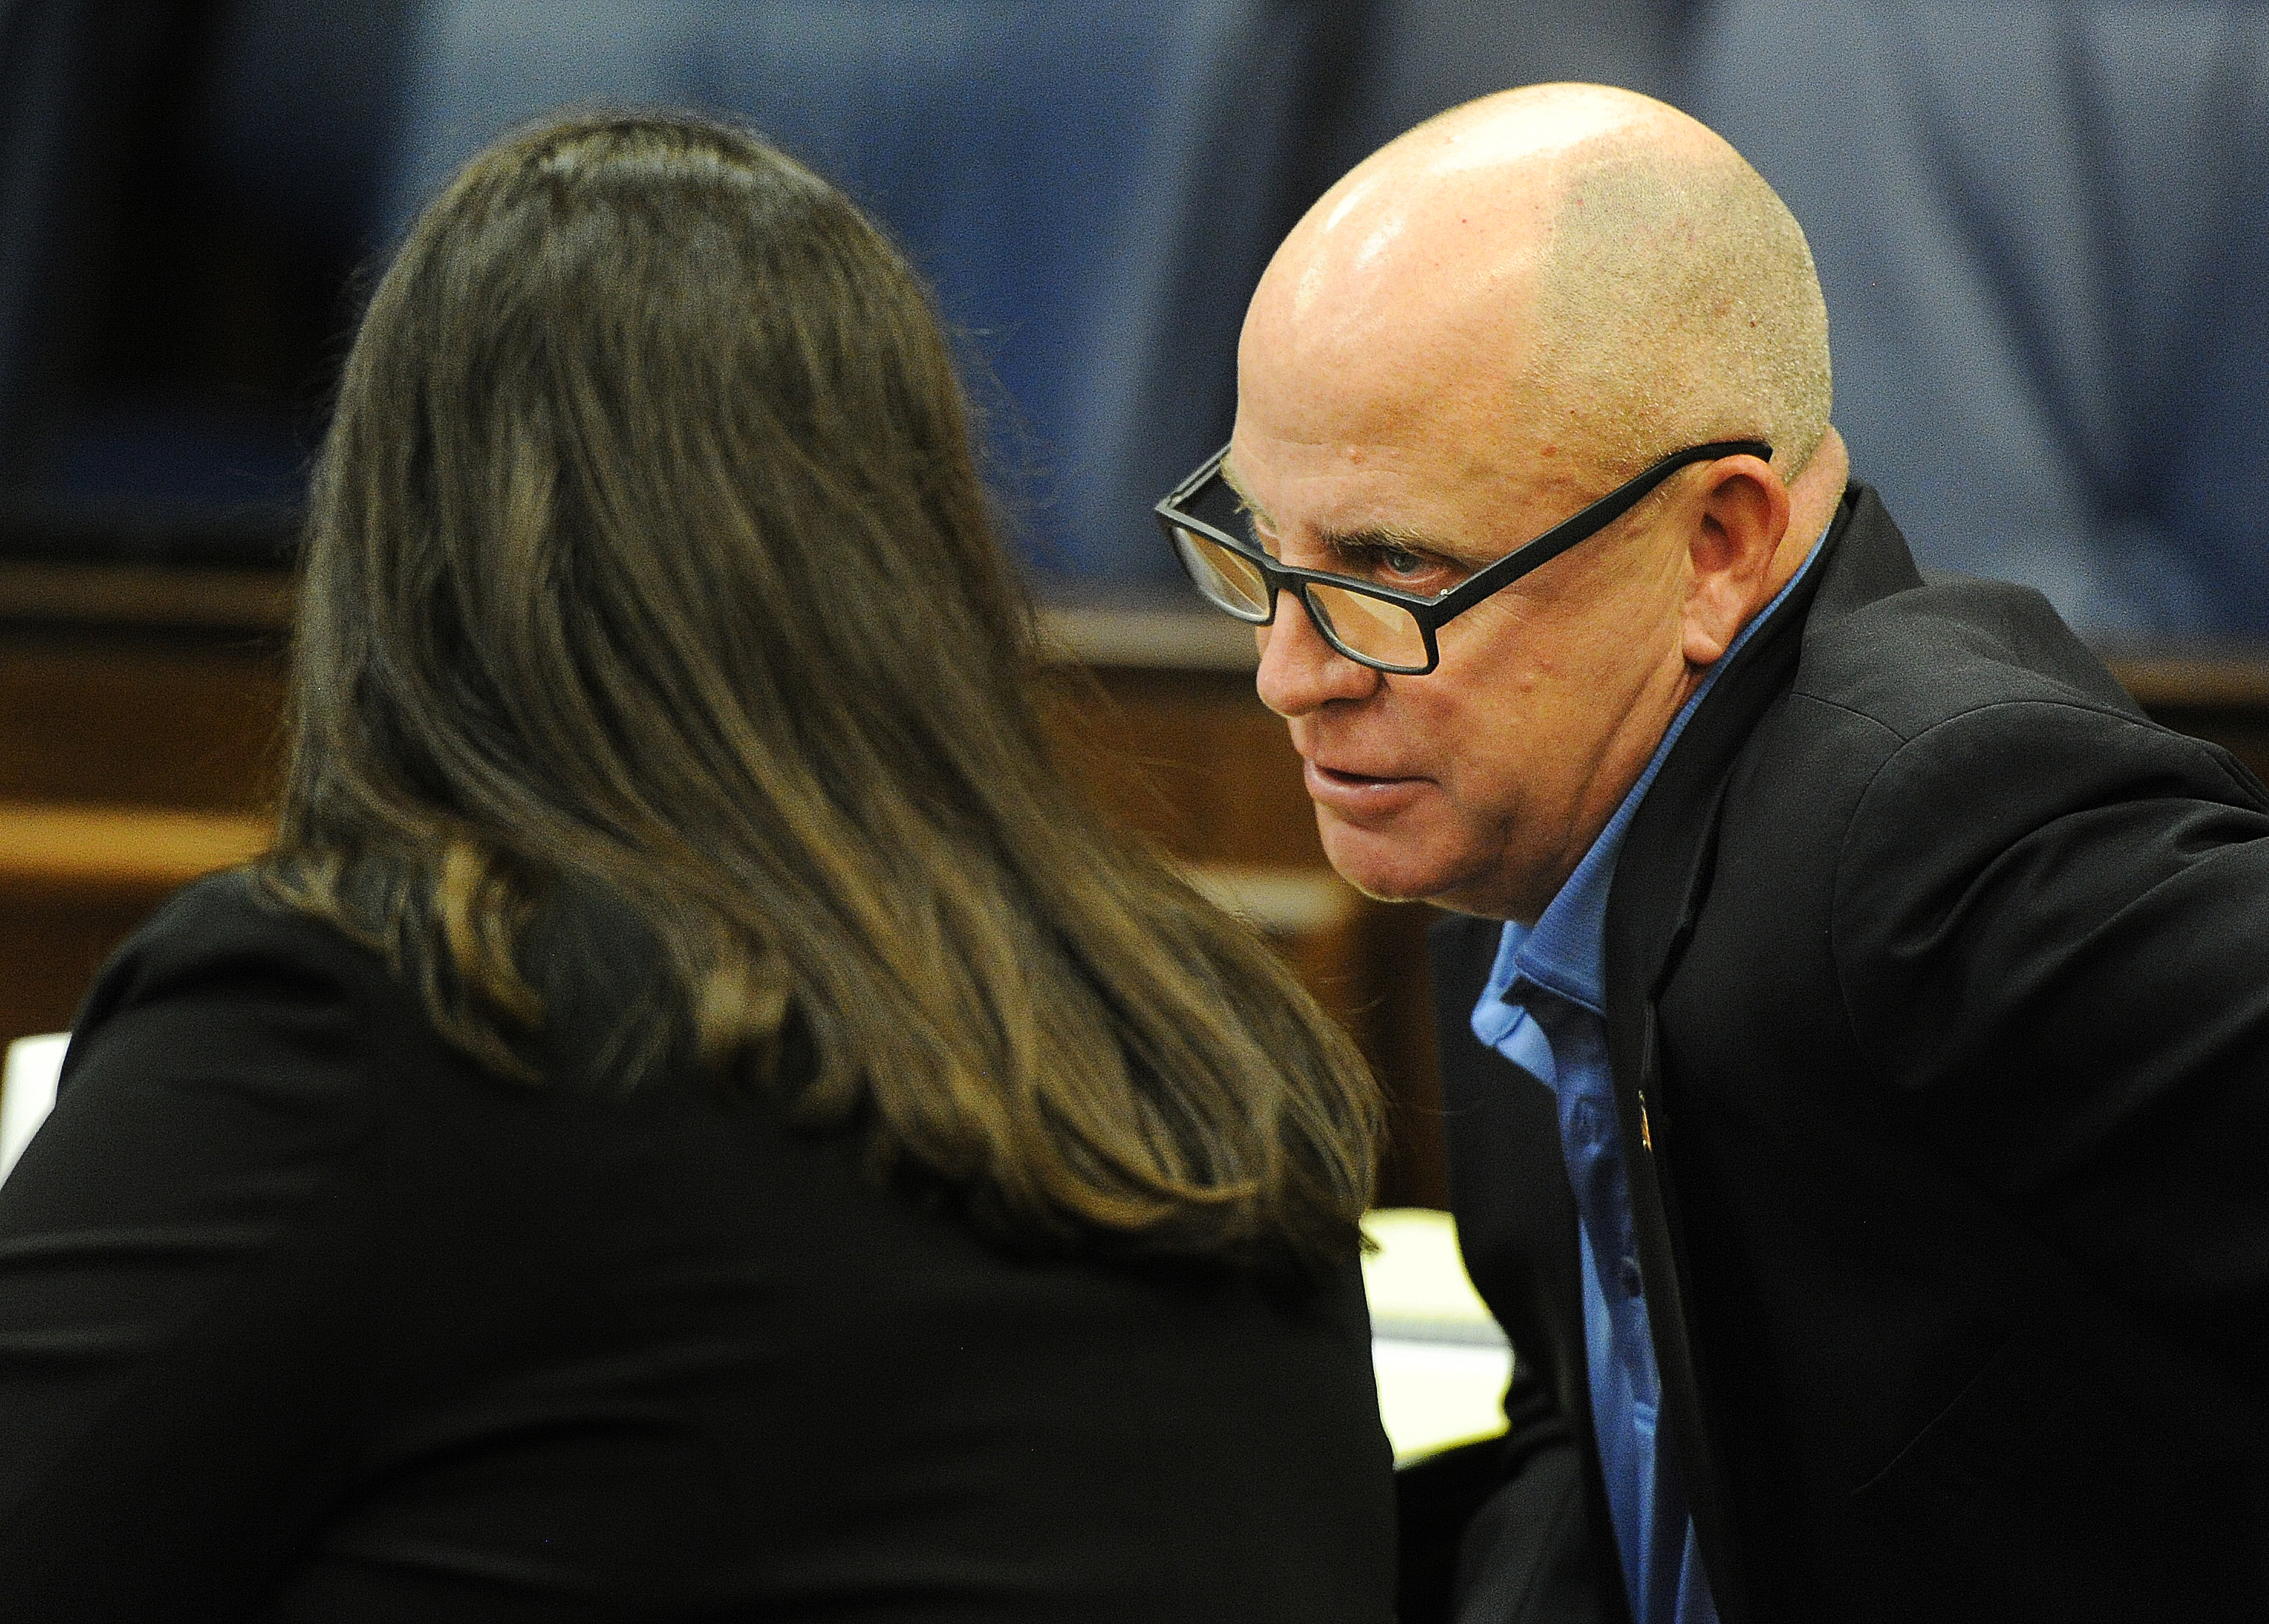 Josh Hamilton pleads to misdemeanor in daughter-assault case